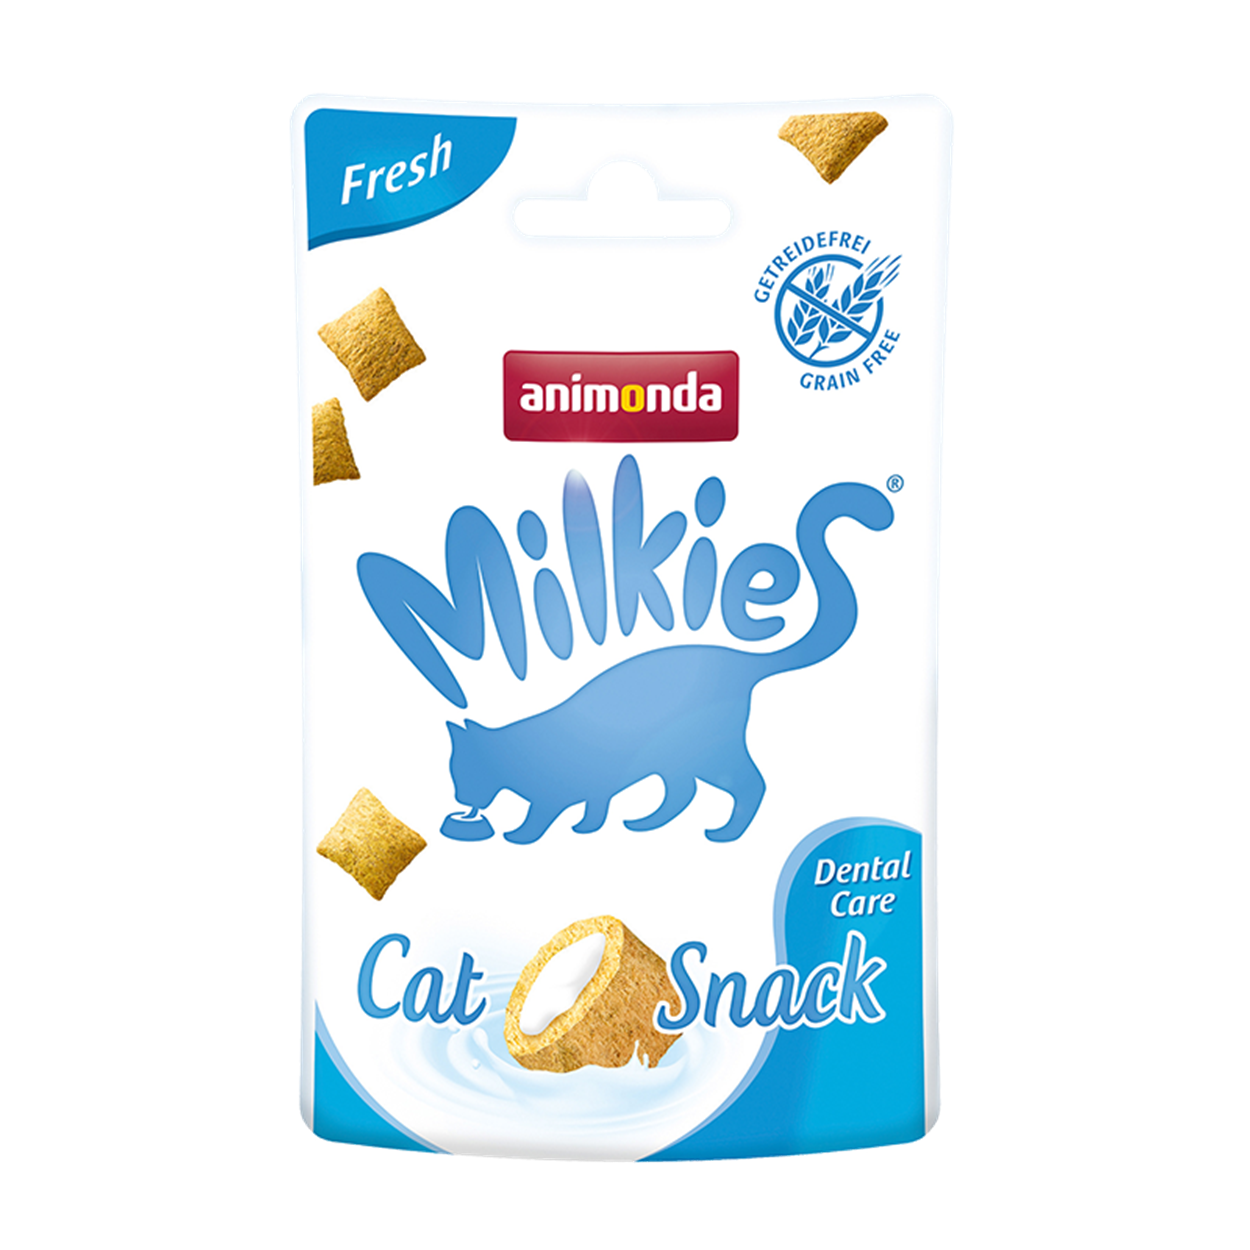 Animonda Milkies Cat Snack 12x30g Fresh - Dental Care